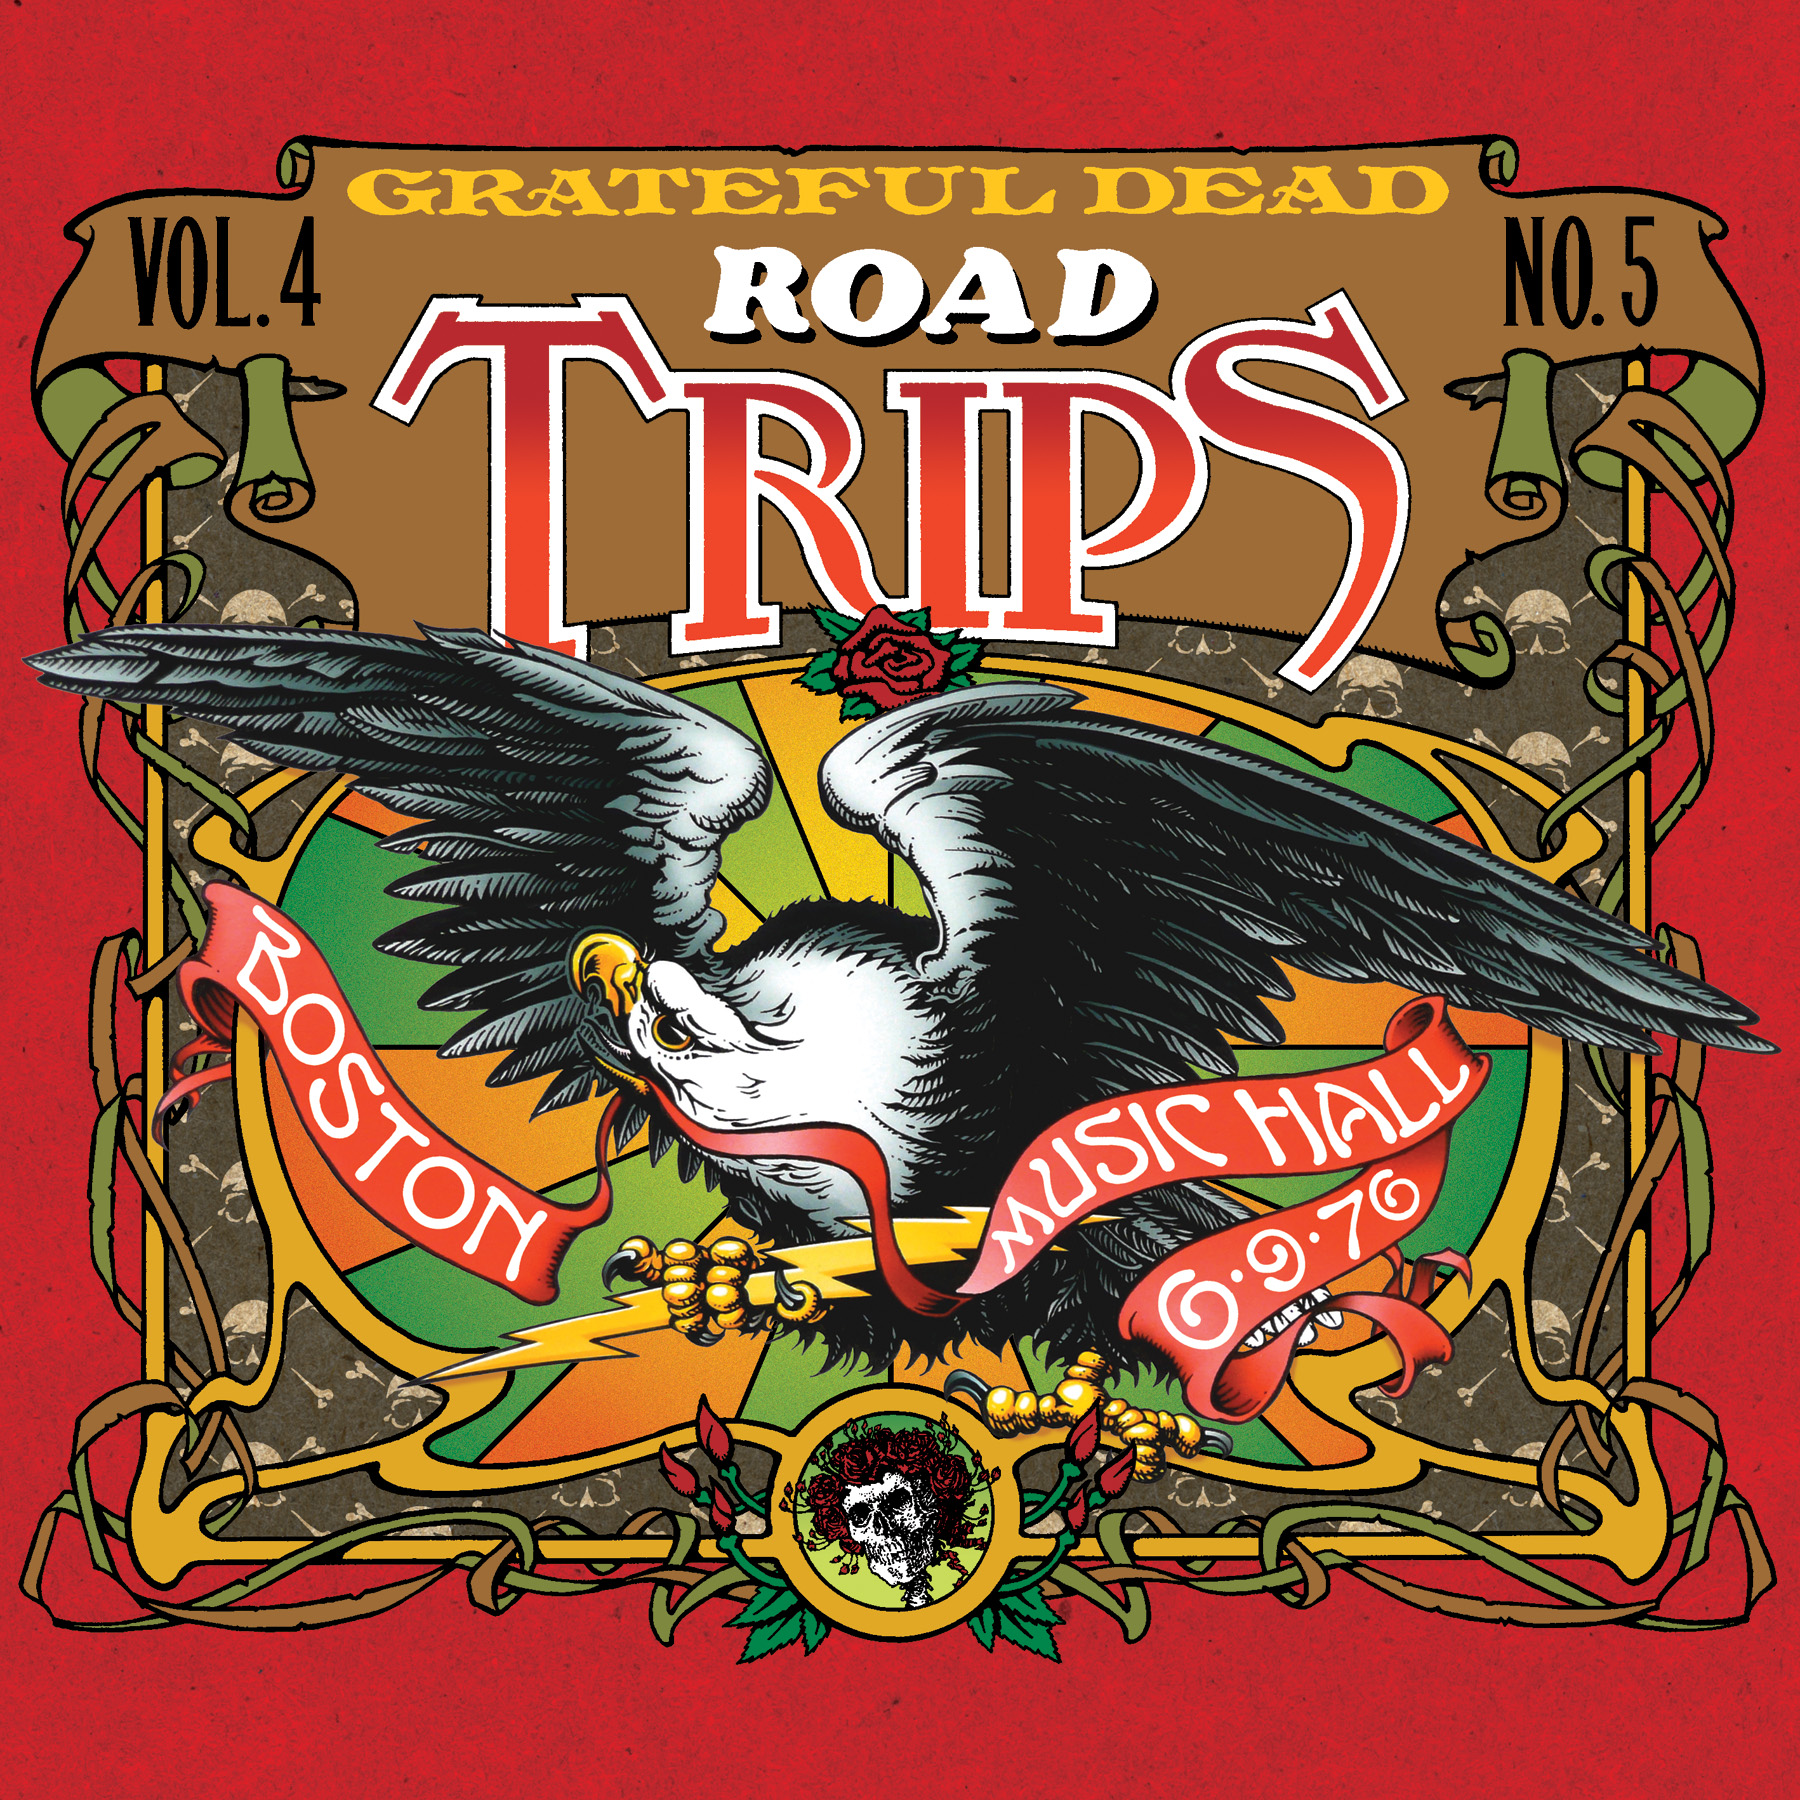 Grateful Dead Road Trips 4.5 album cover artwork